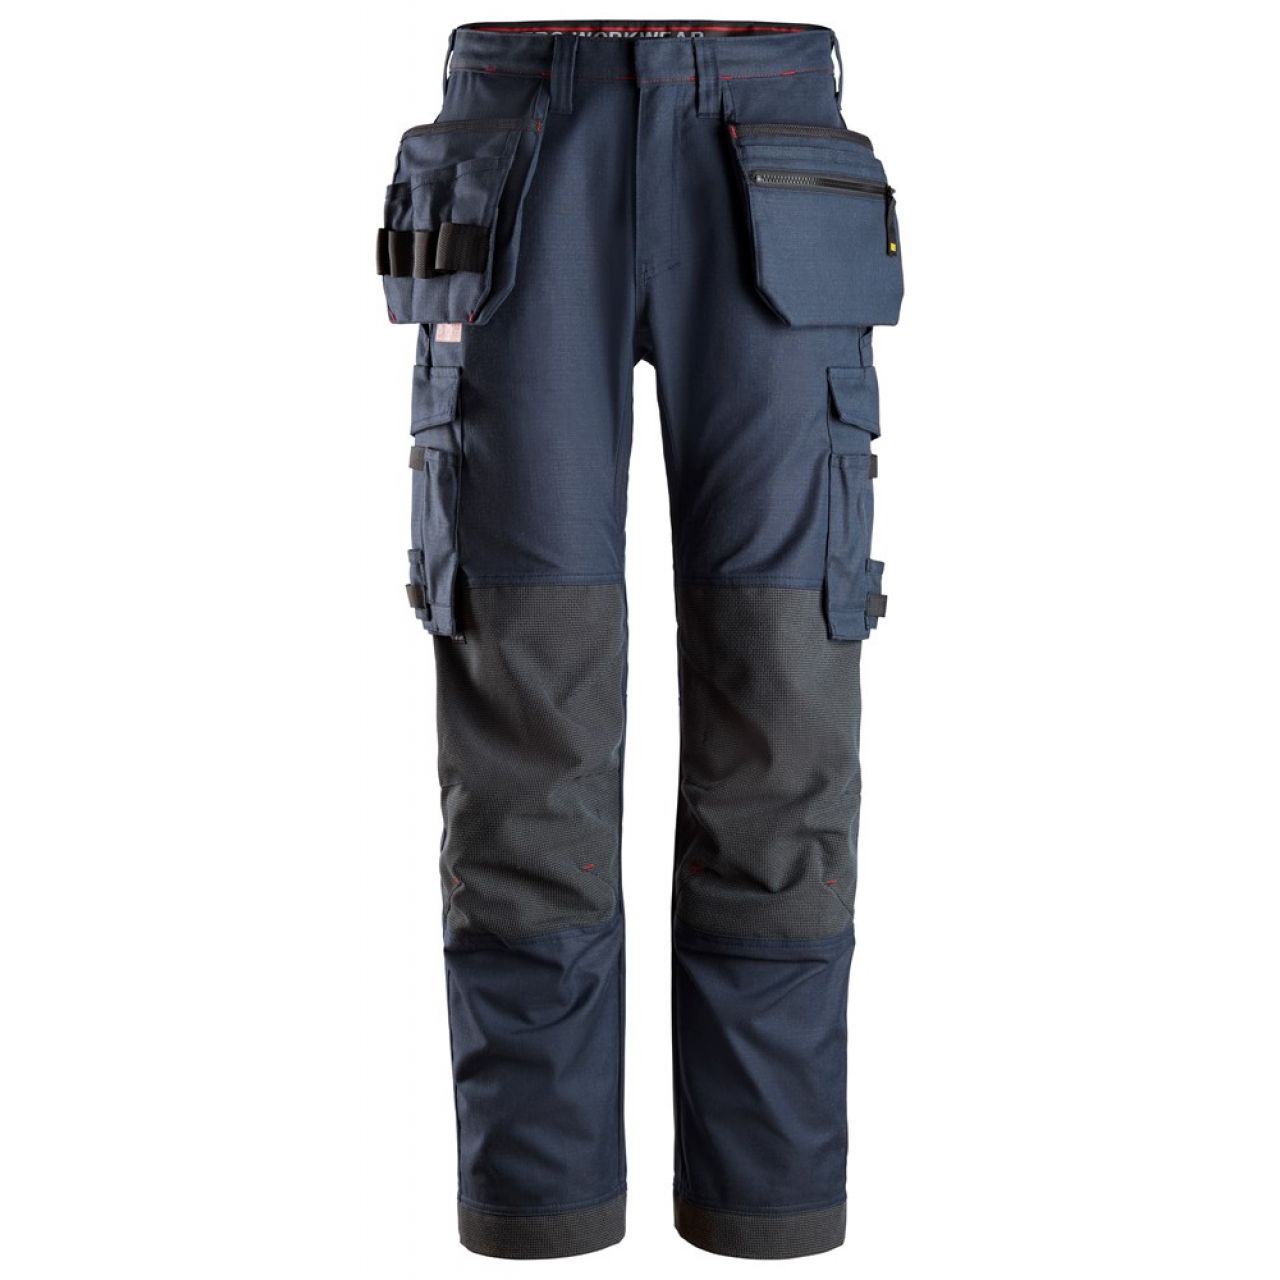 6262 Pantalones largos de trabajo con bolsillos flotantes simétricos ProtecWork azul marino talla 64